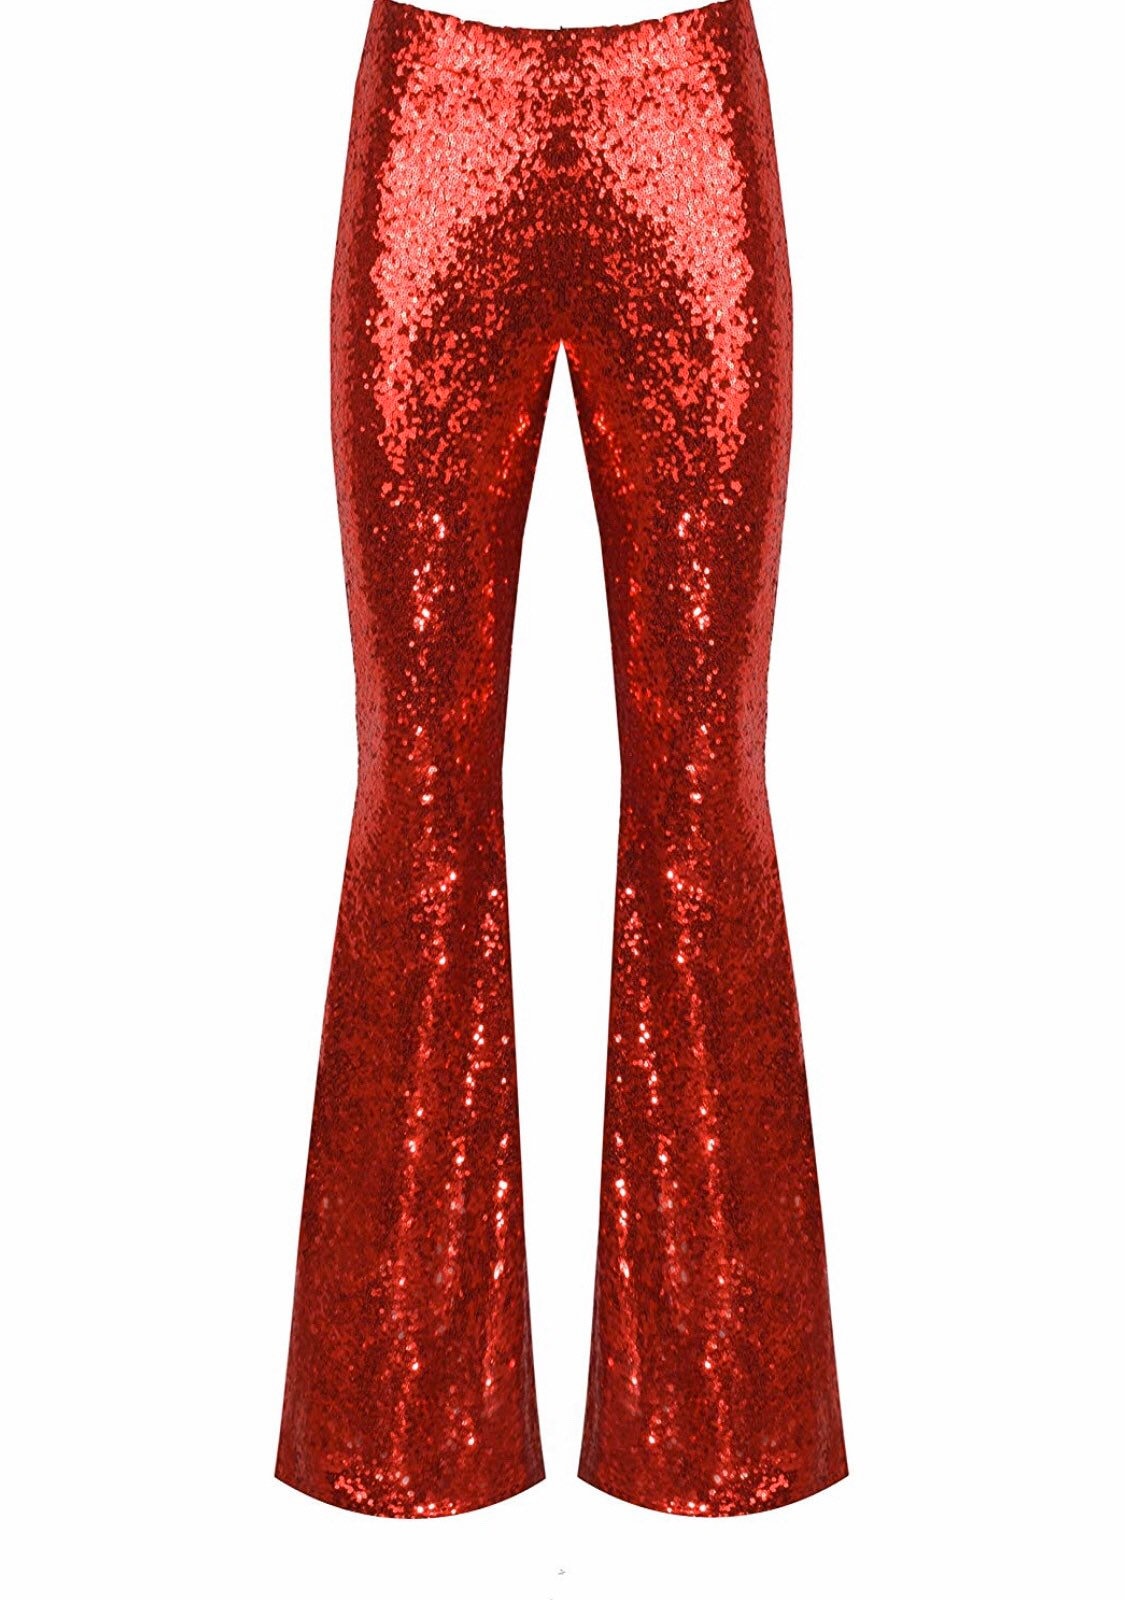 Red Sequin Flare Pants Bell Bottoms Harem Pants Yoga Pants | Etsy